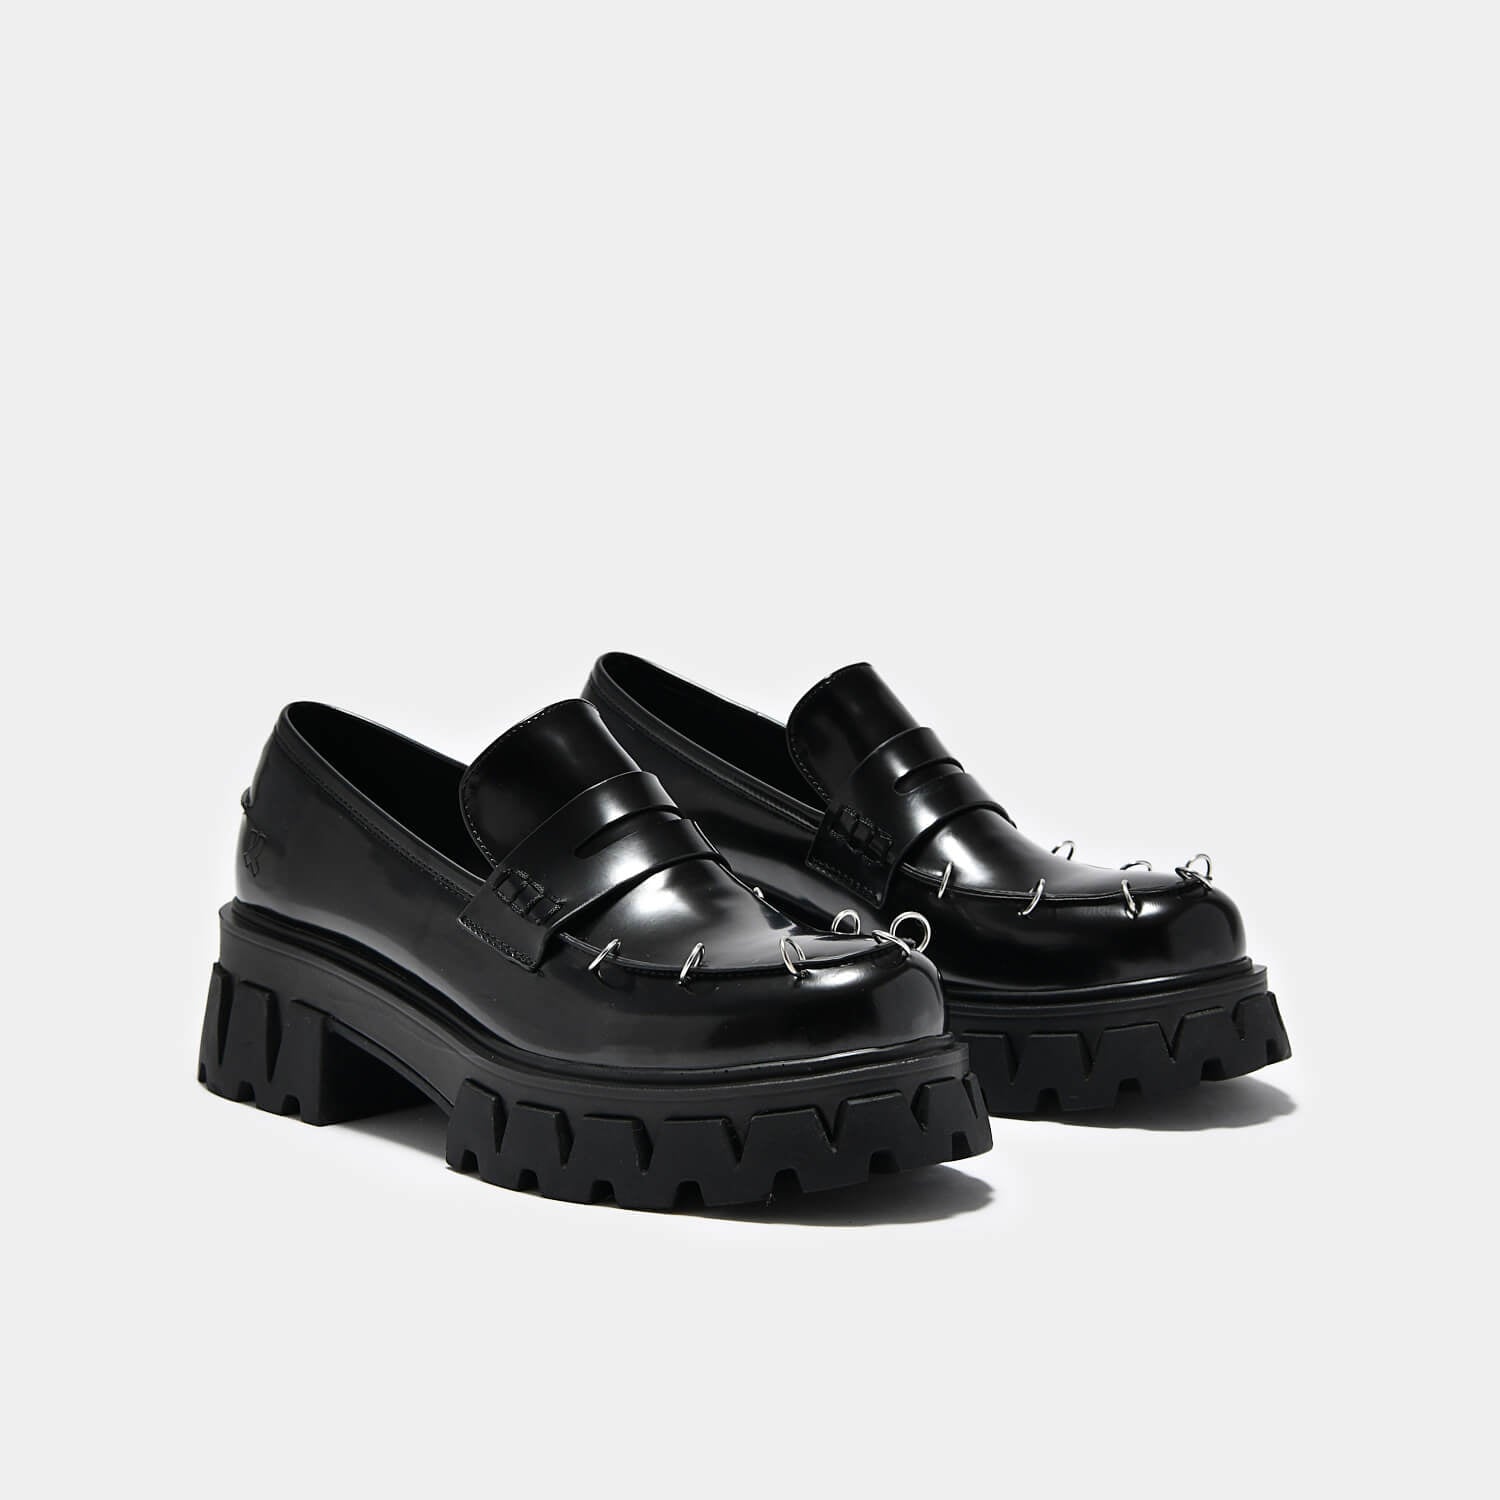 Gensai Men's Cyber Punk Loafers - Shoes - KOI Footwear - Black - Three-Quarter View